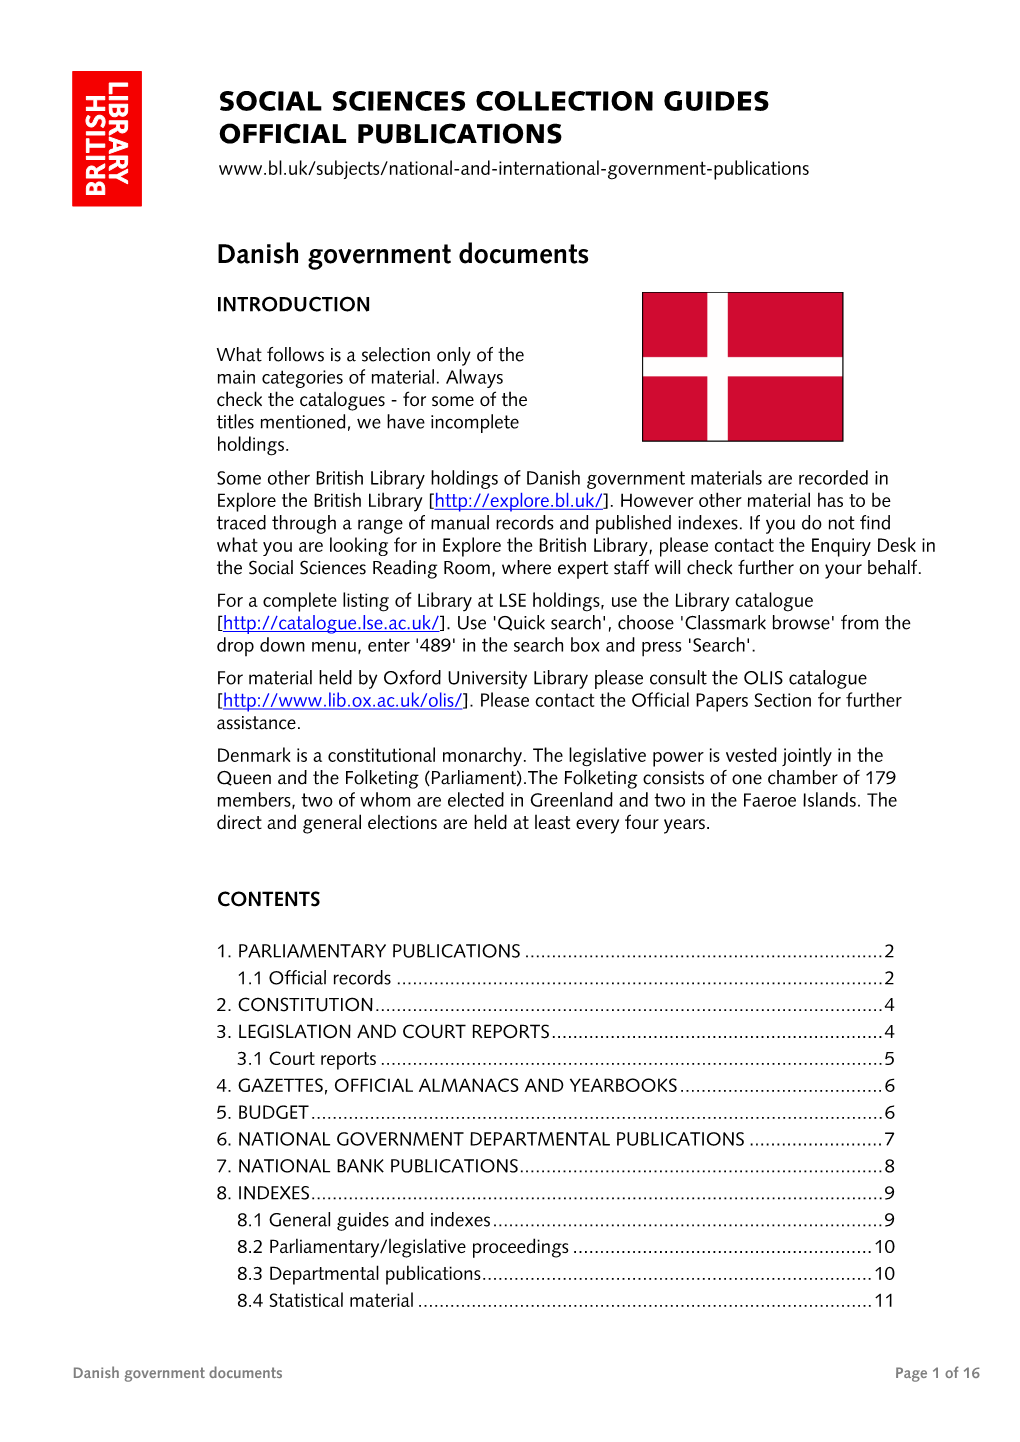 Official Publications: Denmark